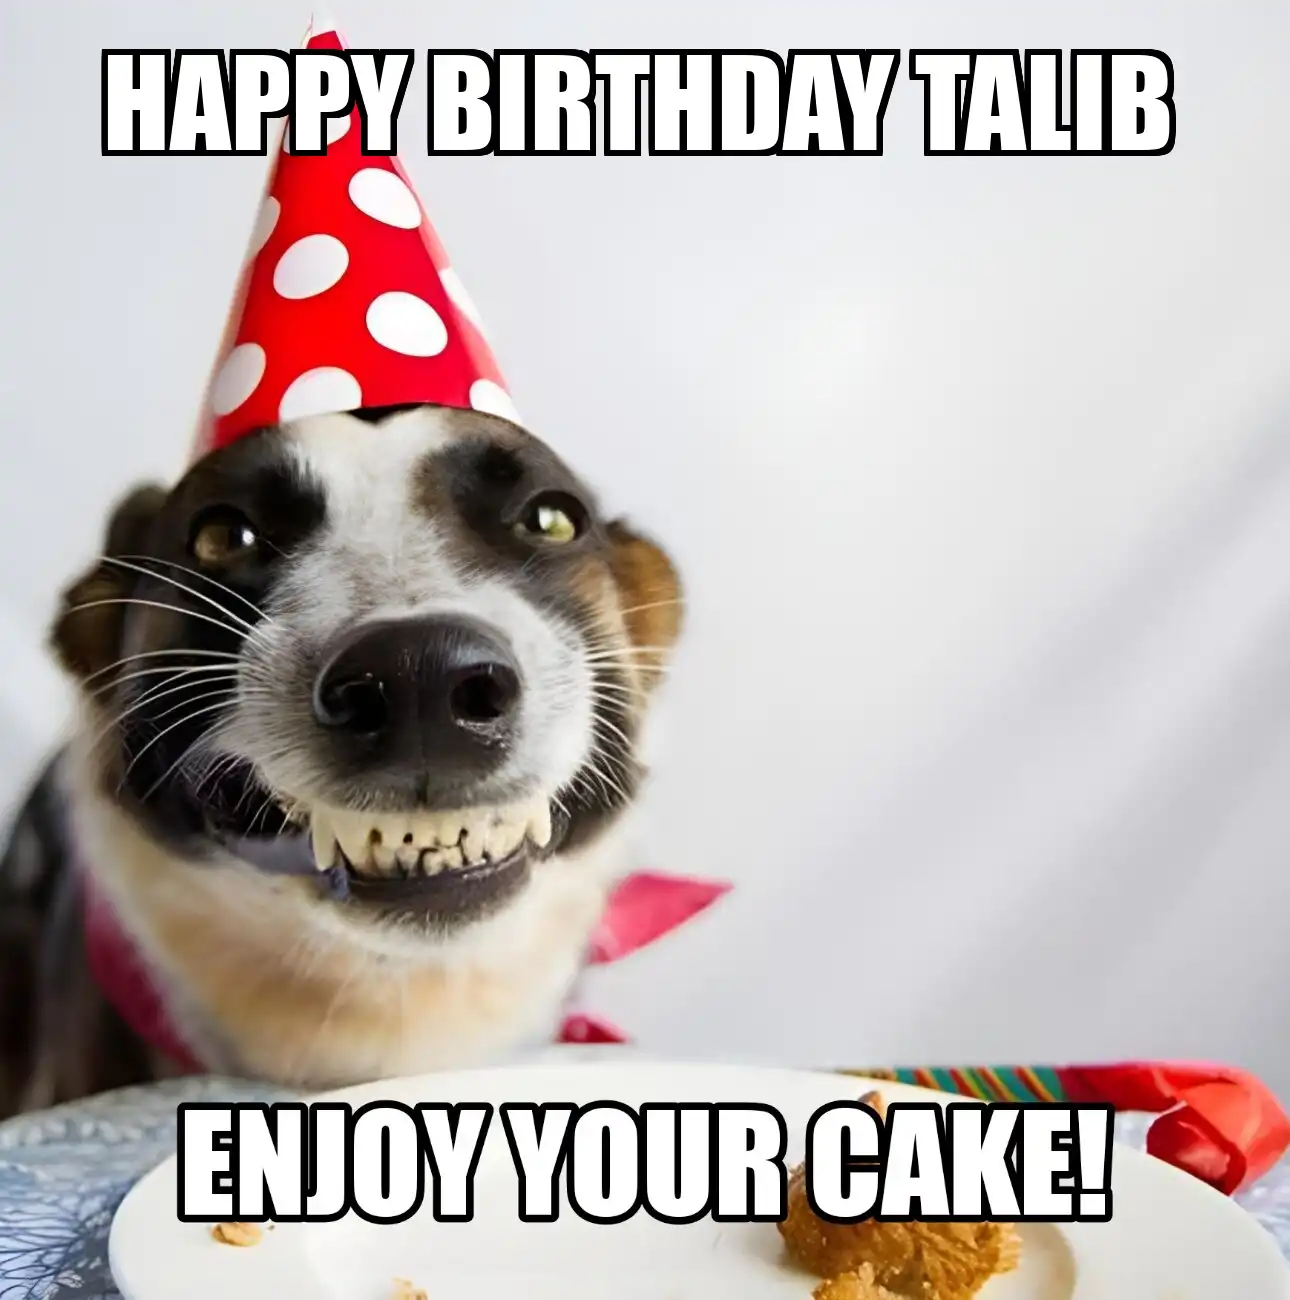 Happy Birthday Talib Enjoy Your Cake Dog Meme